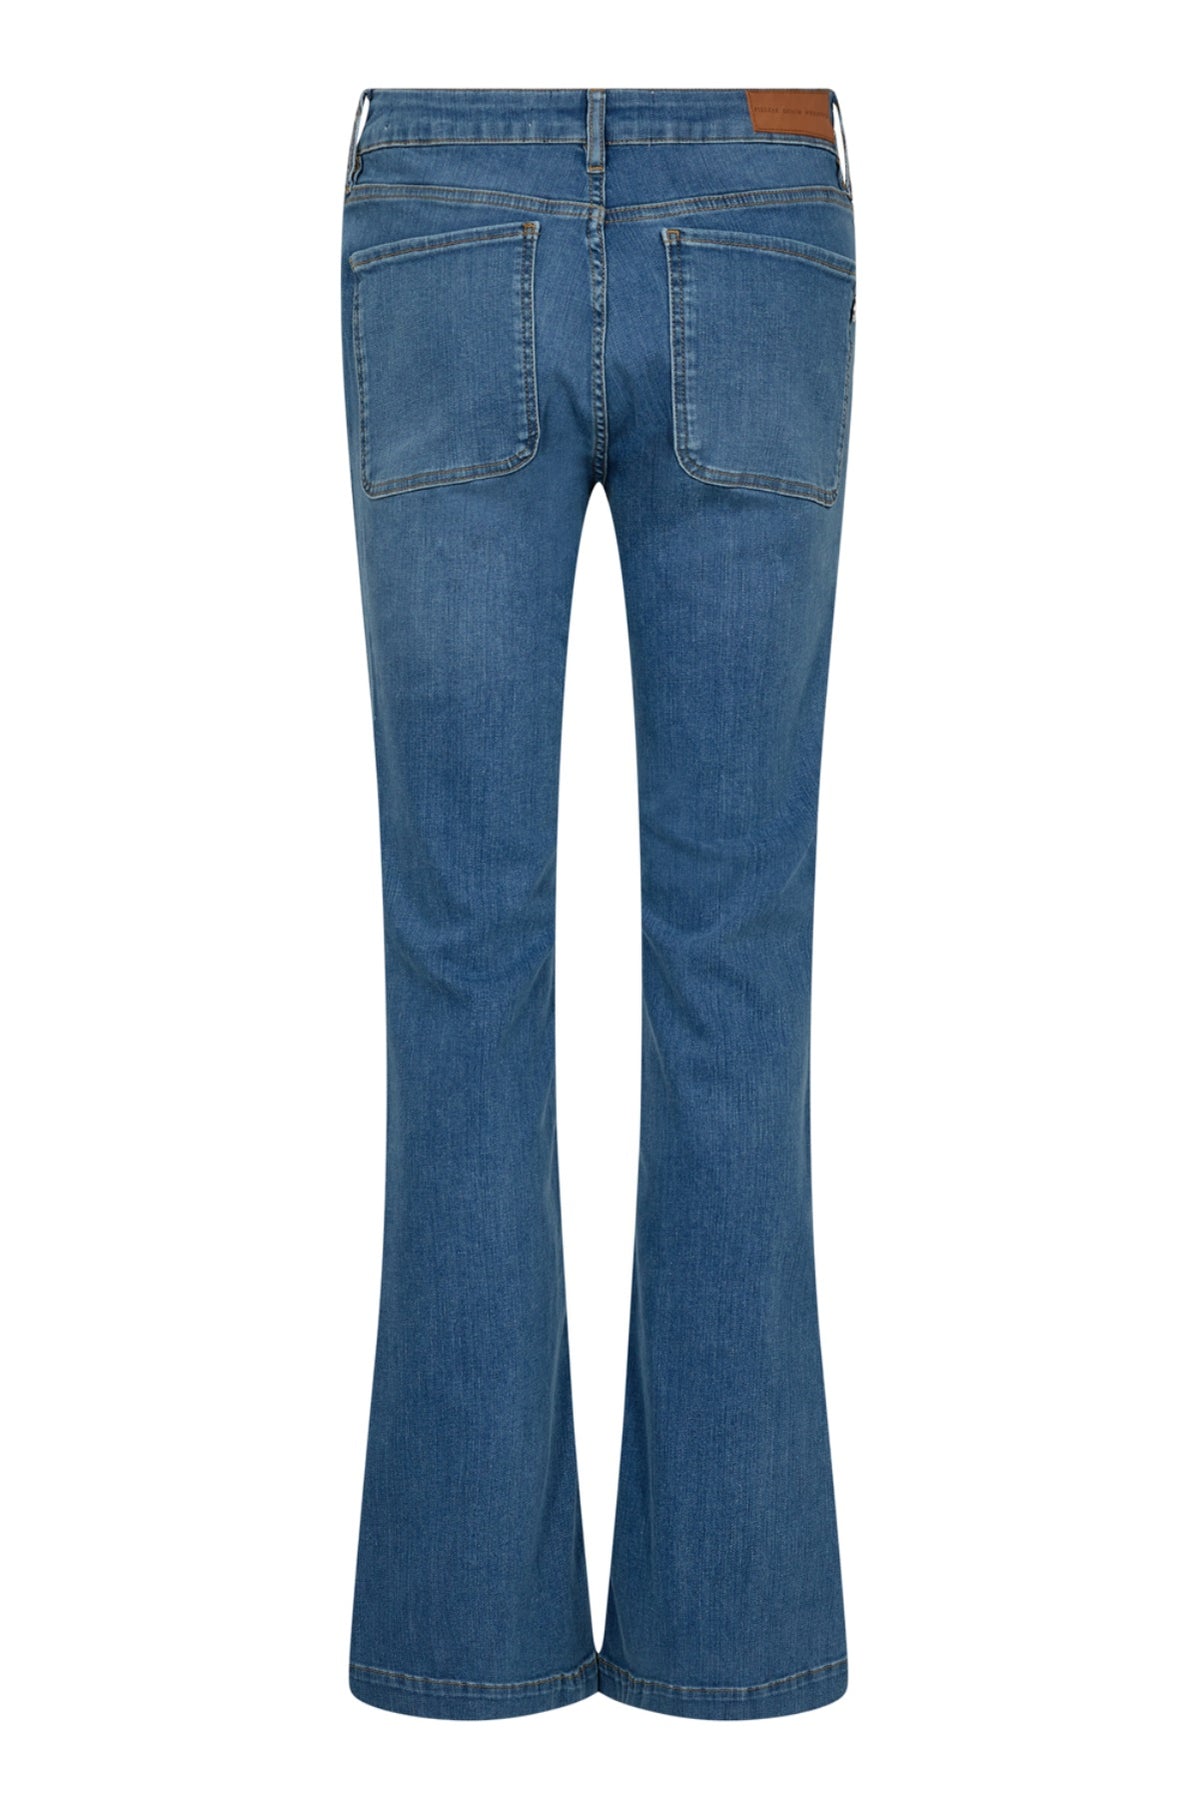 Pieszak Cara Jeans 70's Wash Bright Loreto, Denim Blue